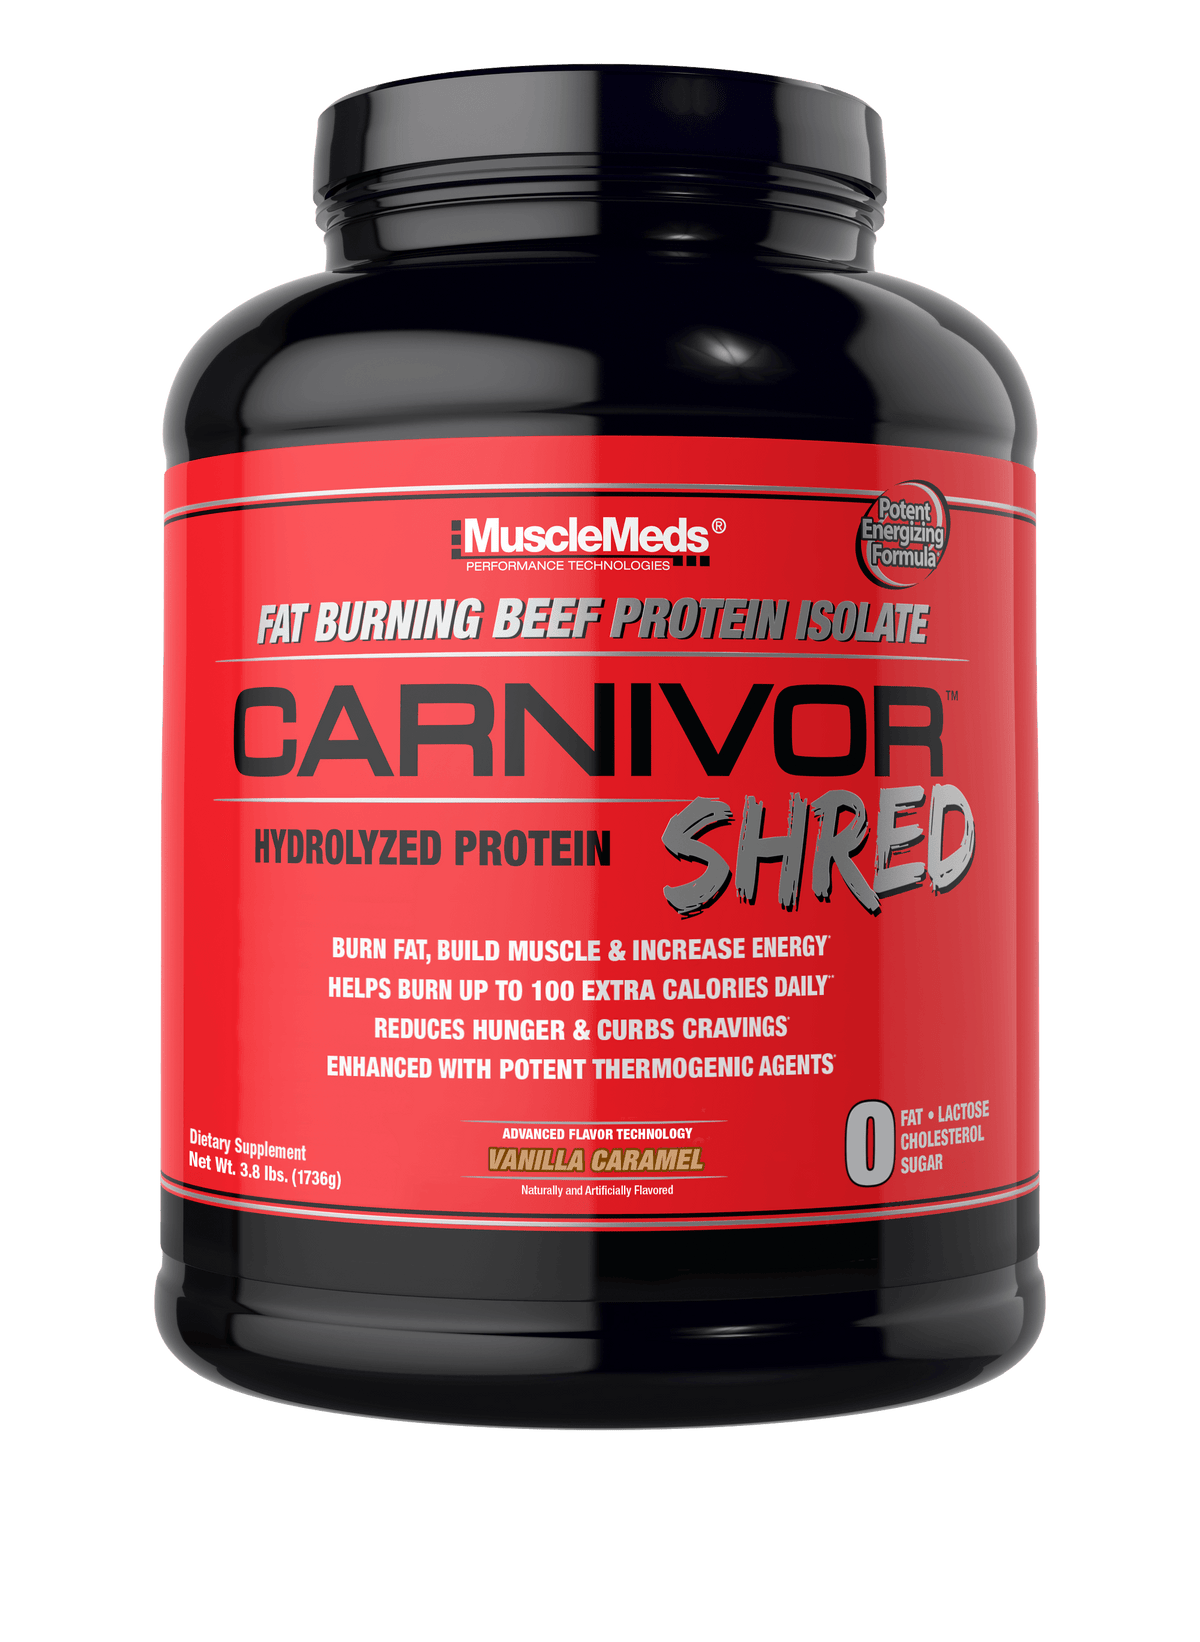 NFLA: Carnivor Shred - 100% Beef Protein + Fat Burn